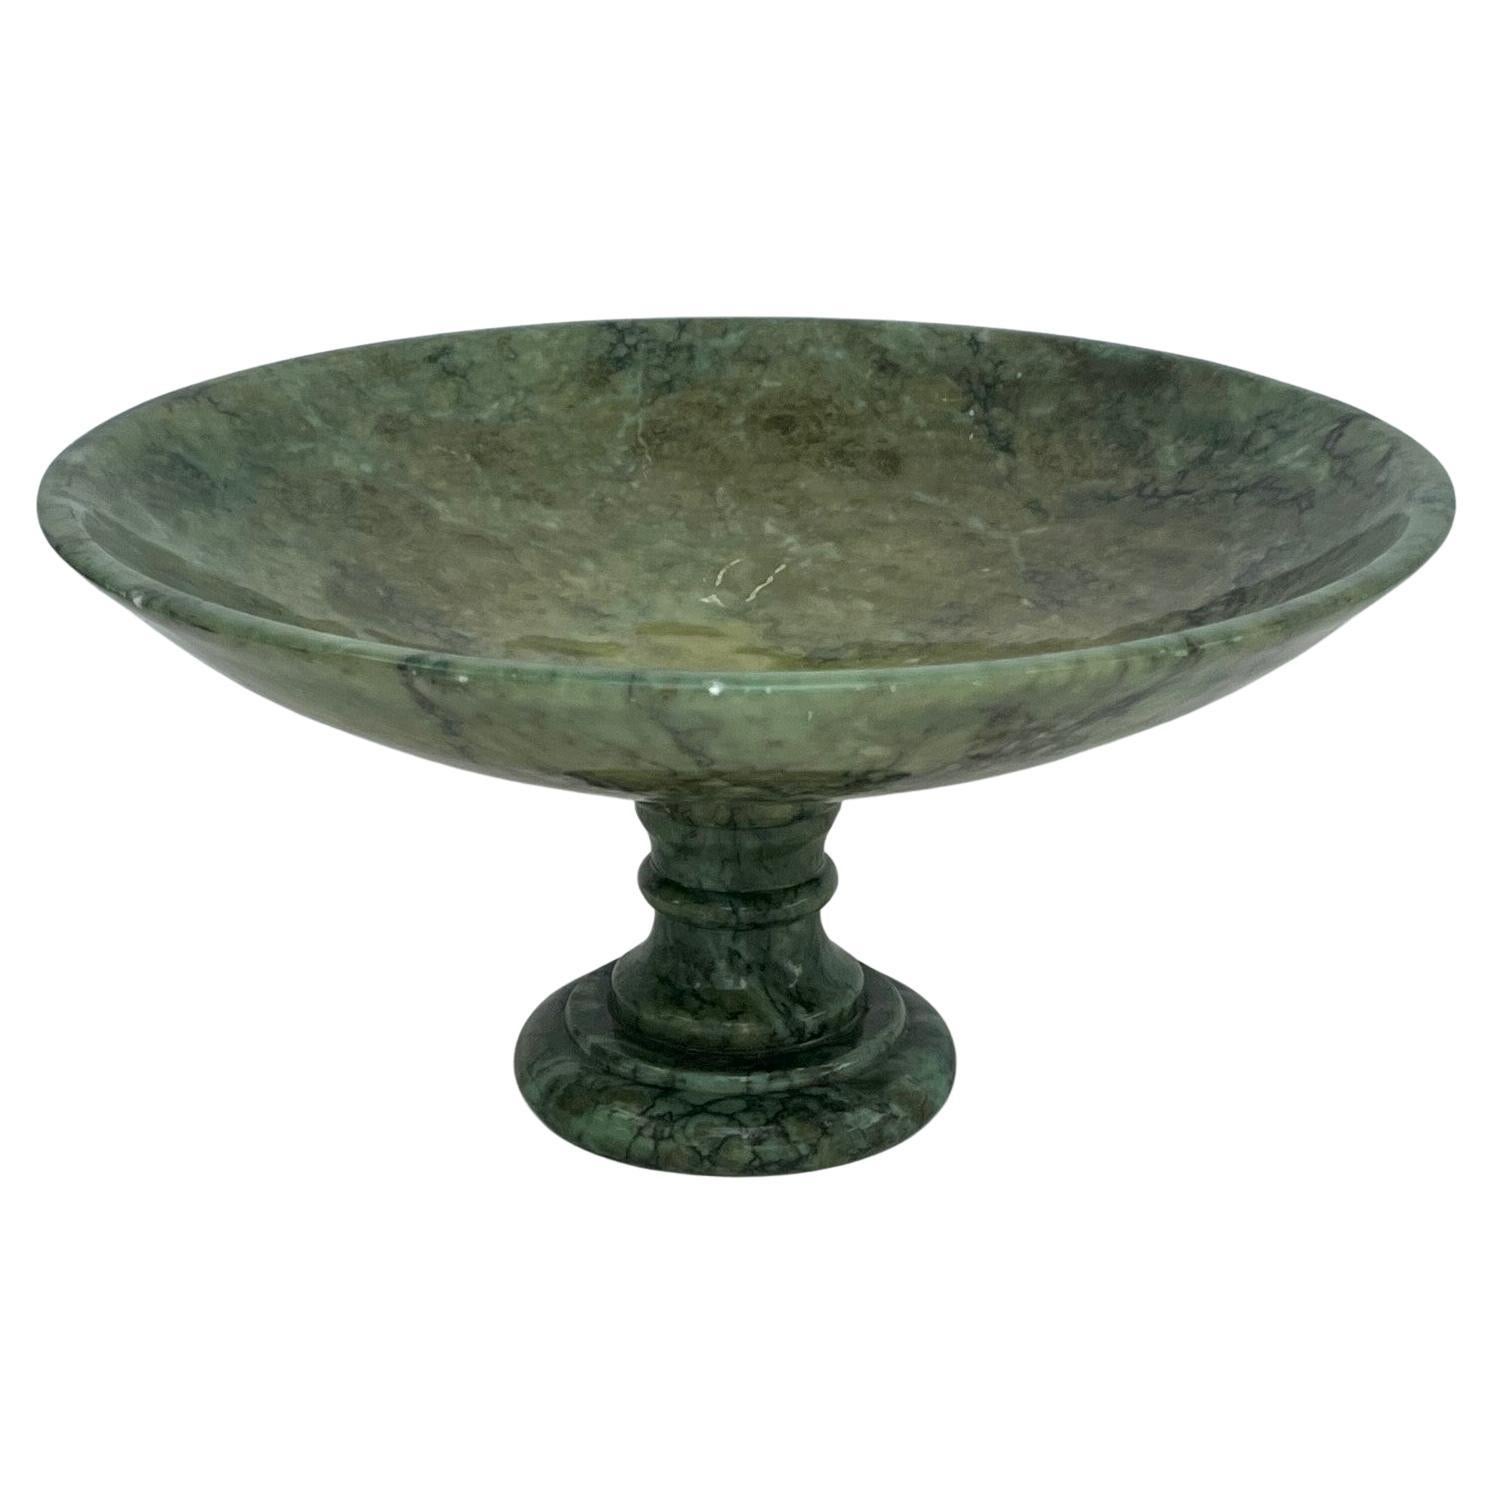 Italian 19th Century Green Marble Pedestal Bowl.